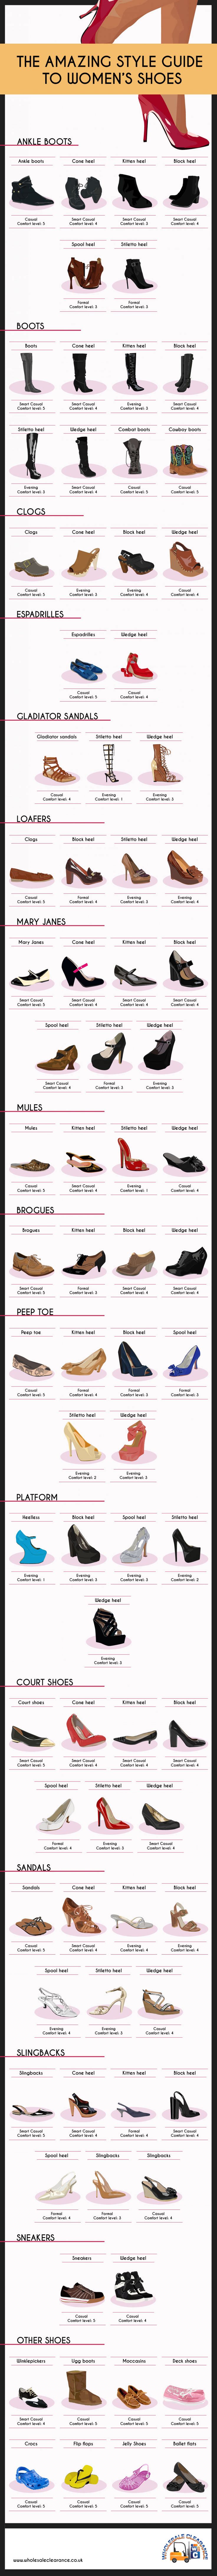 shoe types